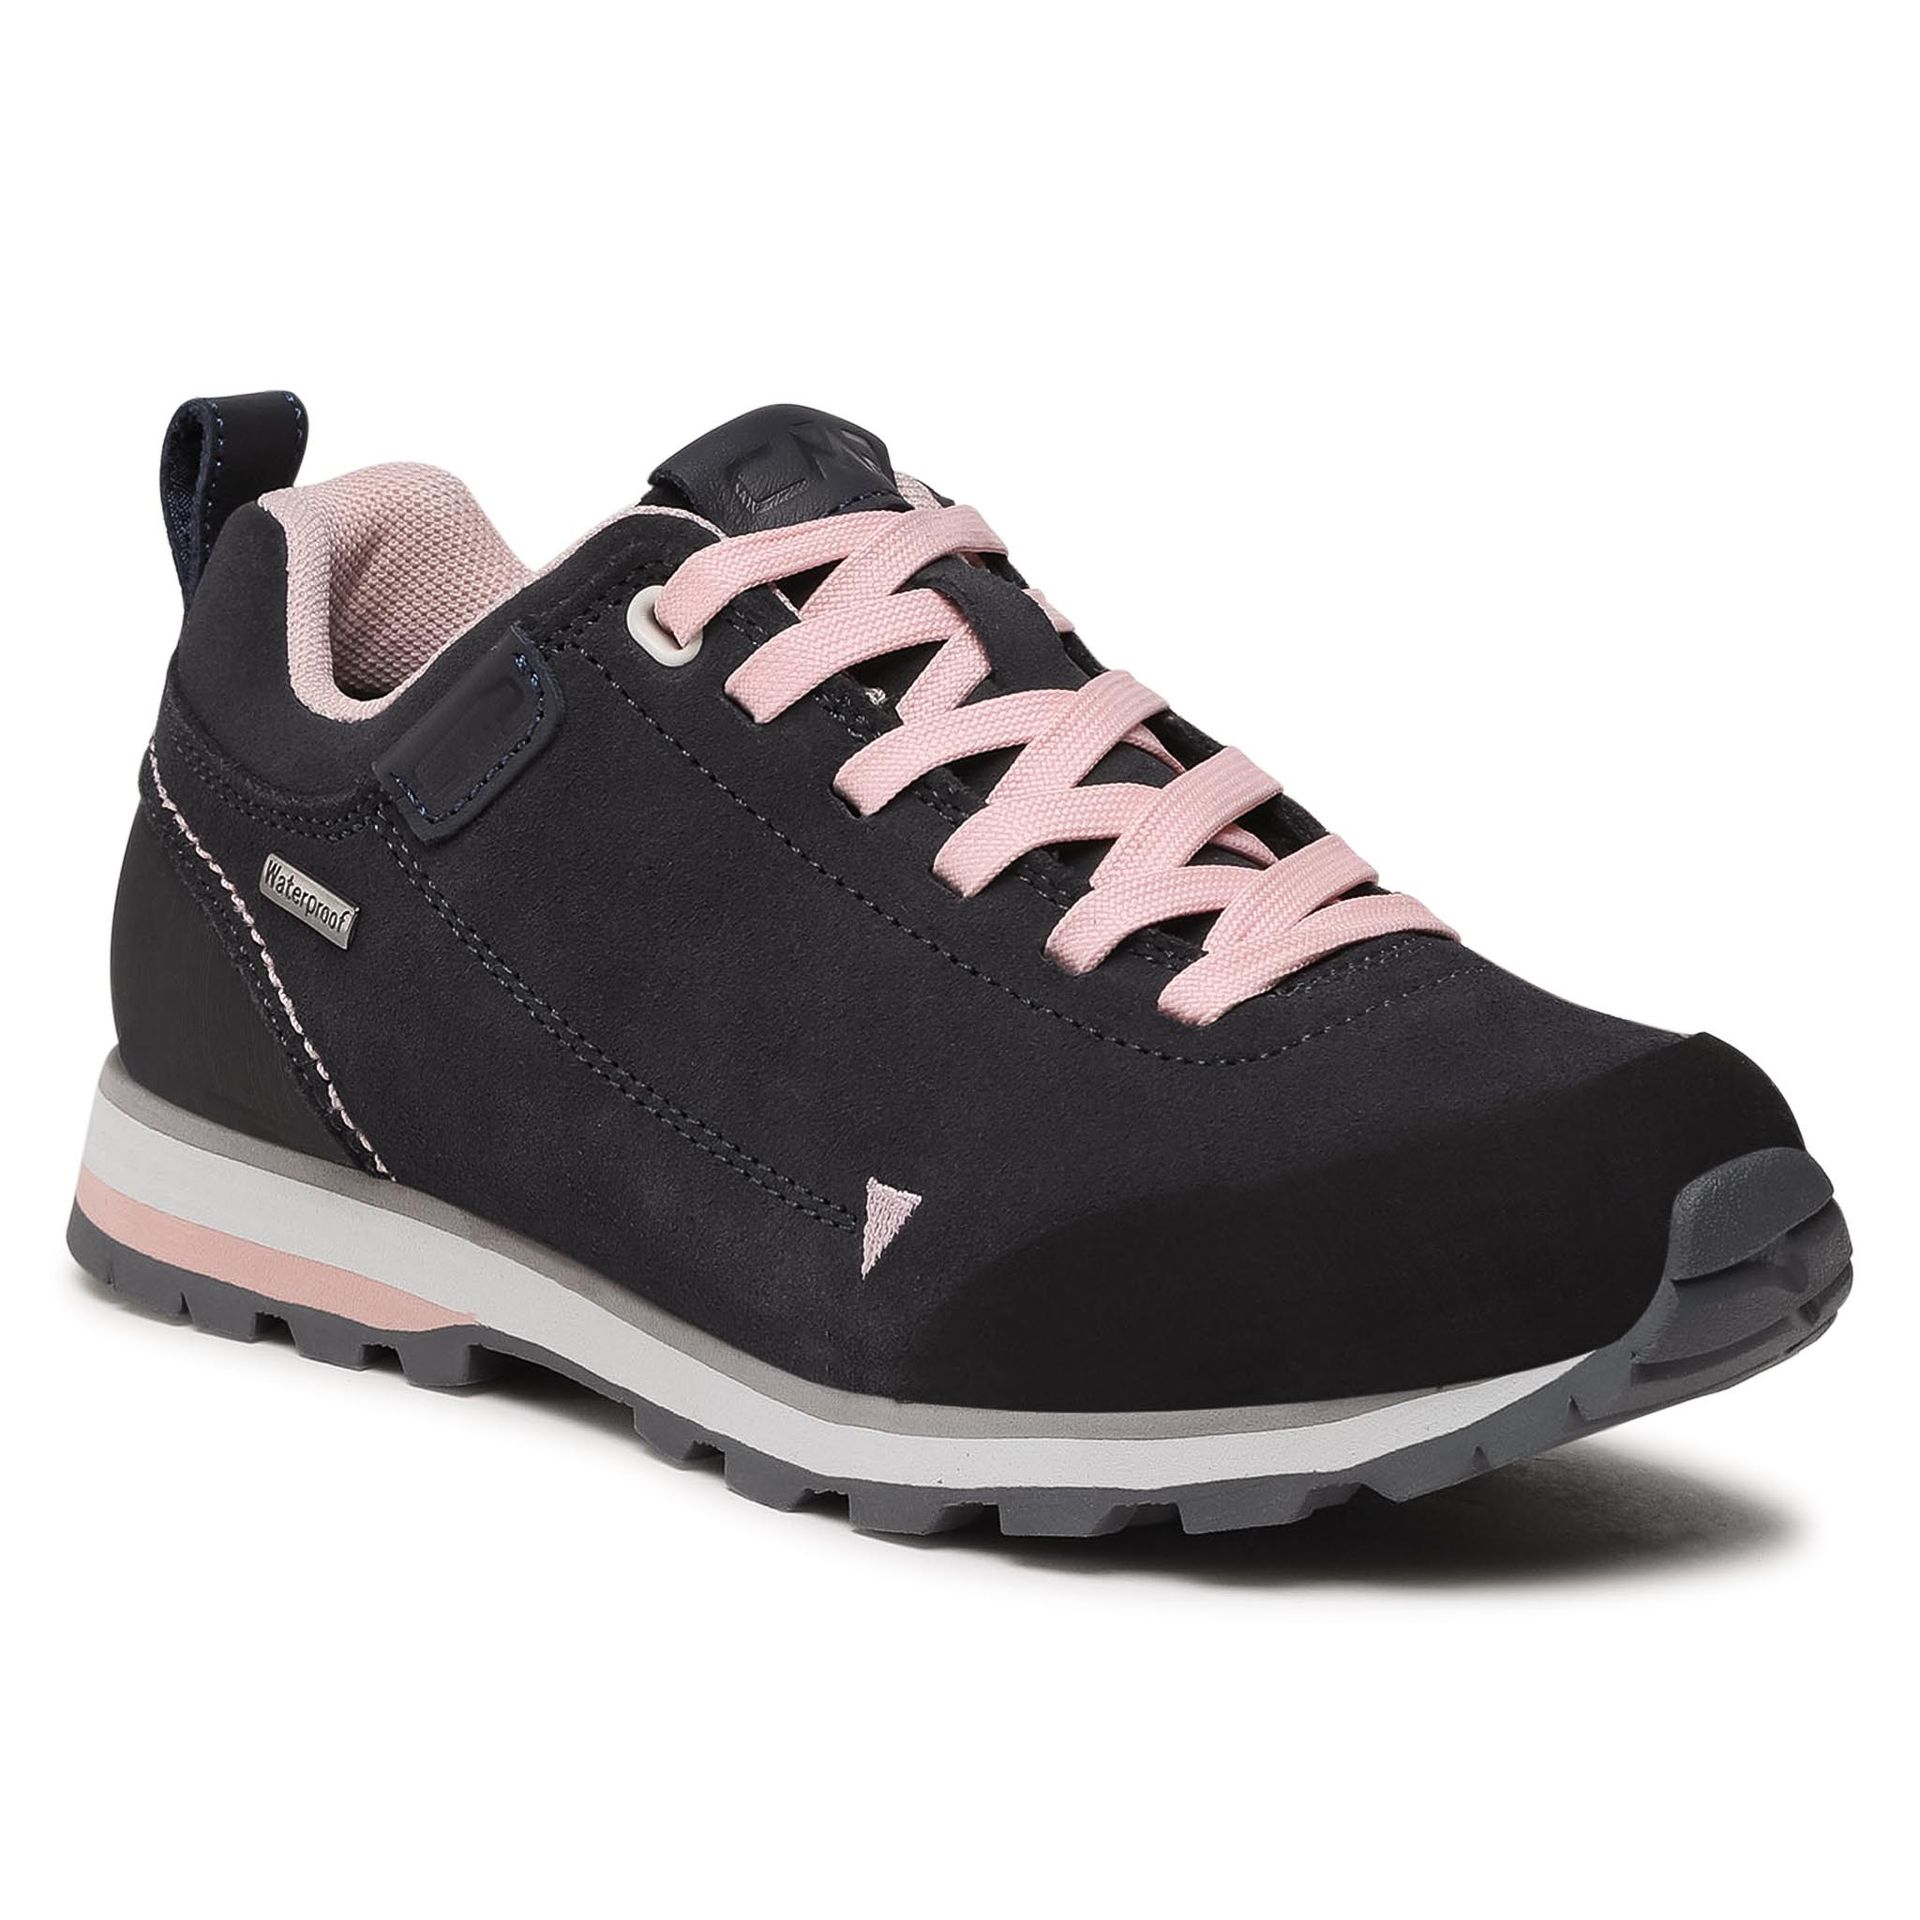 CMP Trekkingi Elettra Low Wmn Hiking Shoe Wp 38Q4616 Antracite/Pastel Pink 70UE